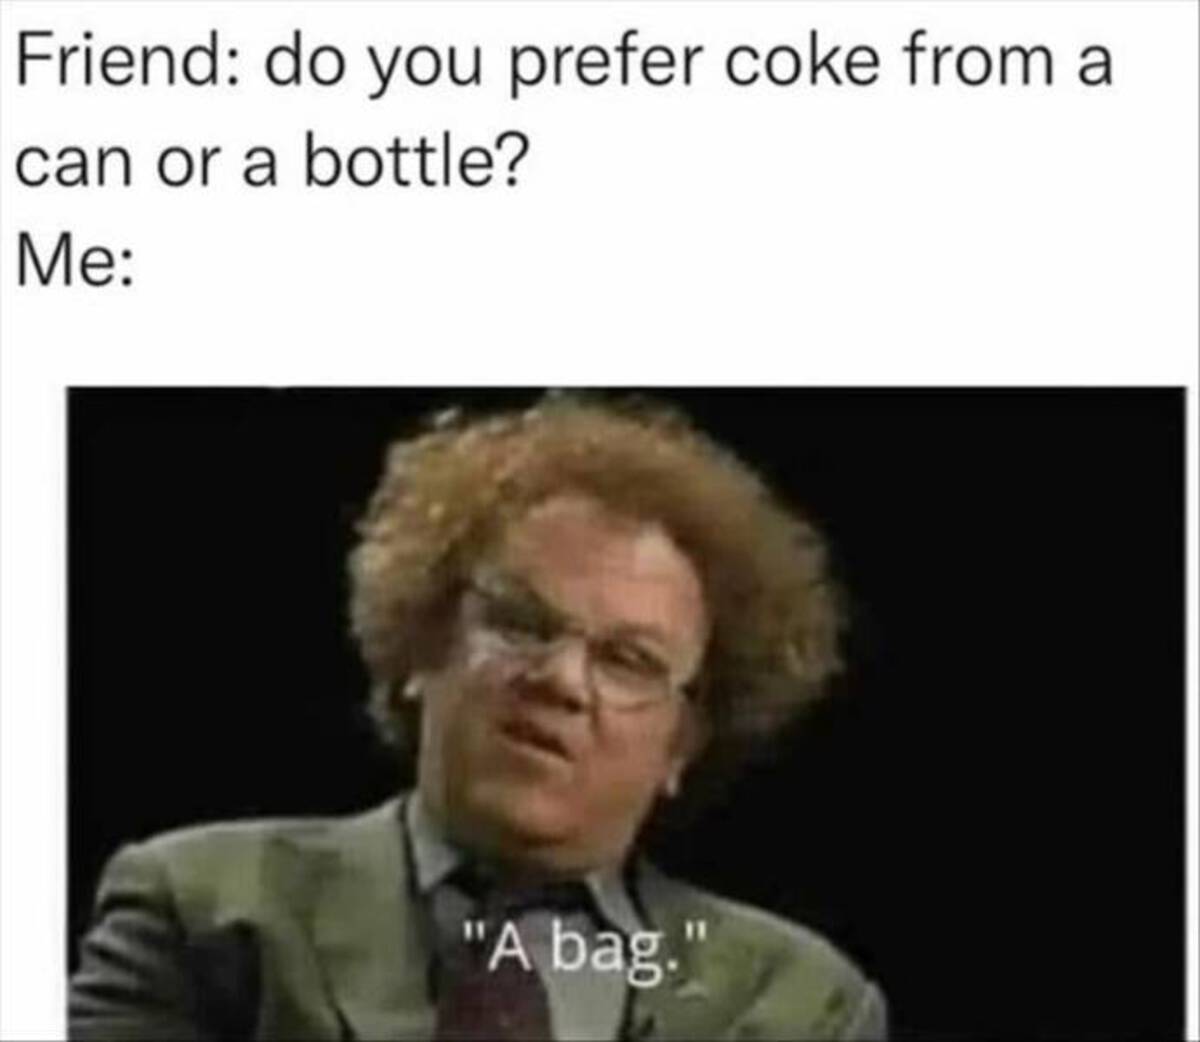 do you prefer coke in a bottle - Friend do you prefer coke from a can or a bottle? Me "A bag."